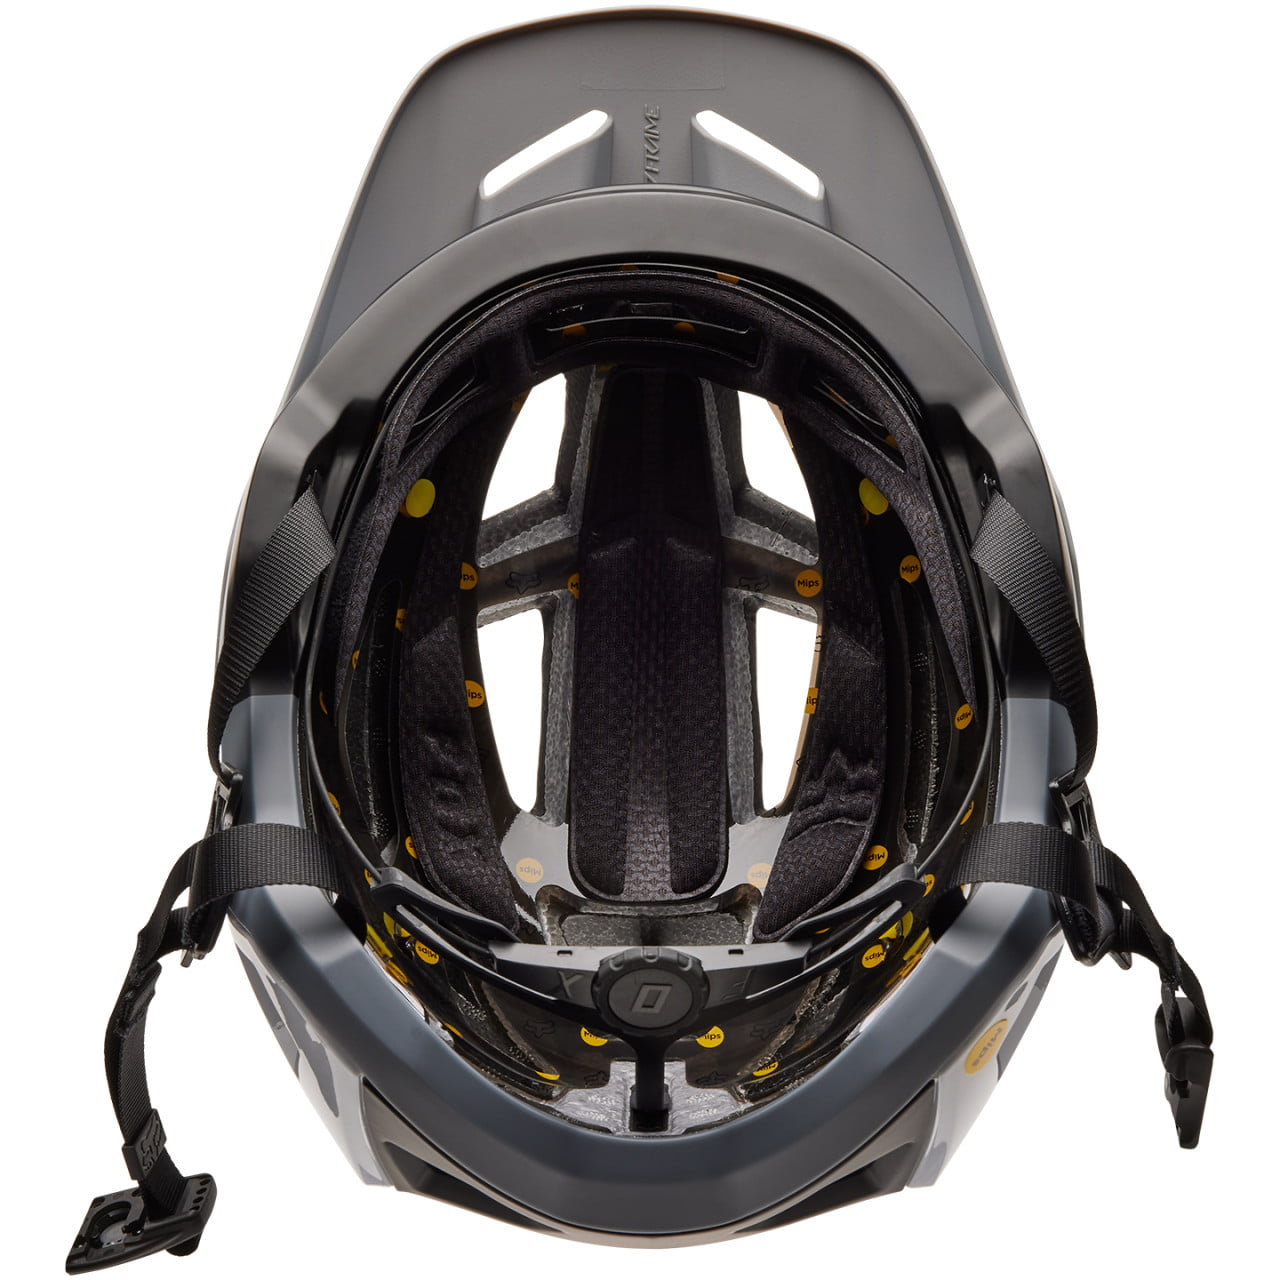 Speedframe Pro Klif Mips MTB Helmet